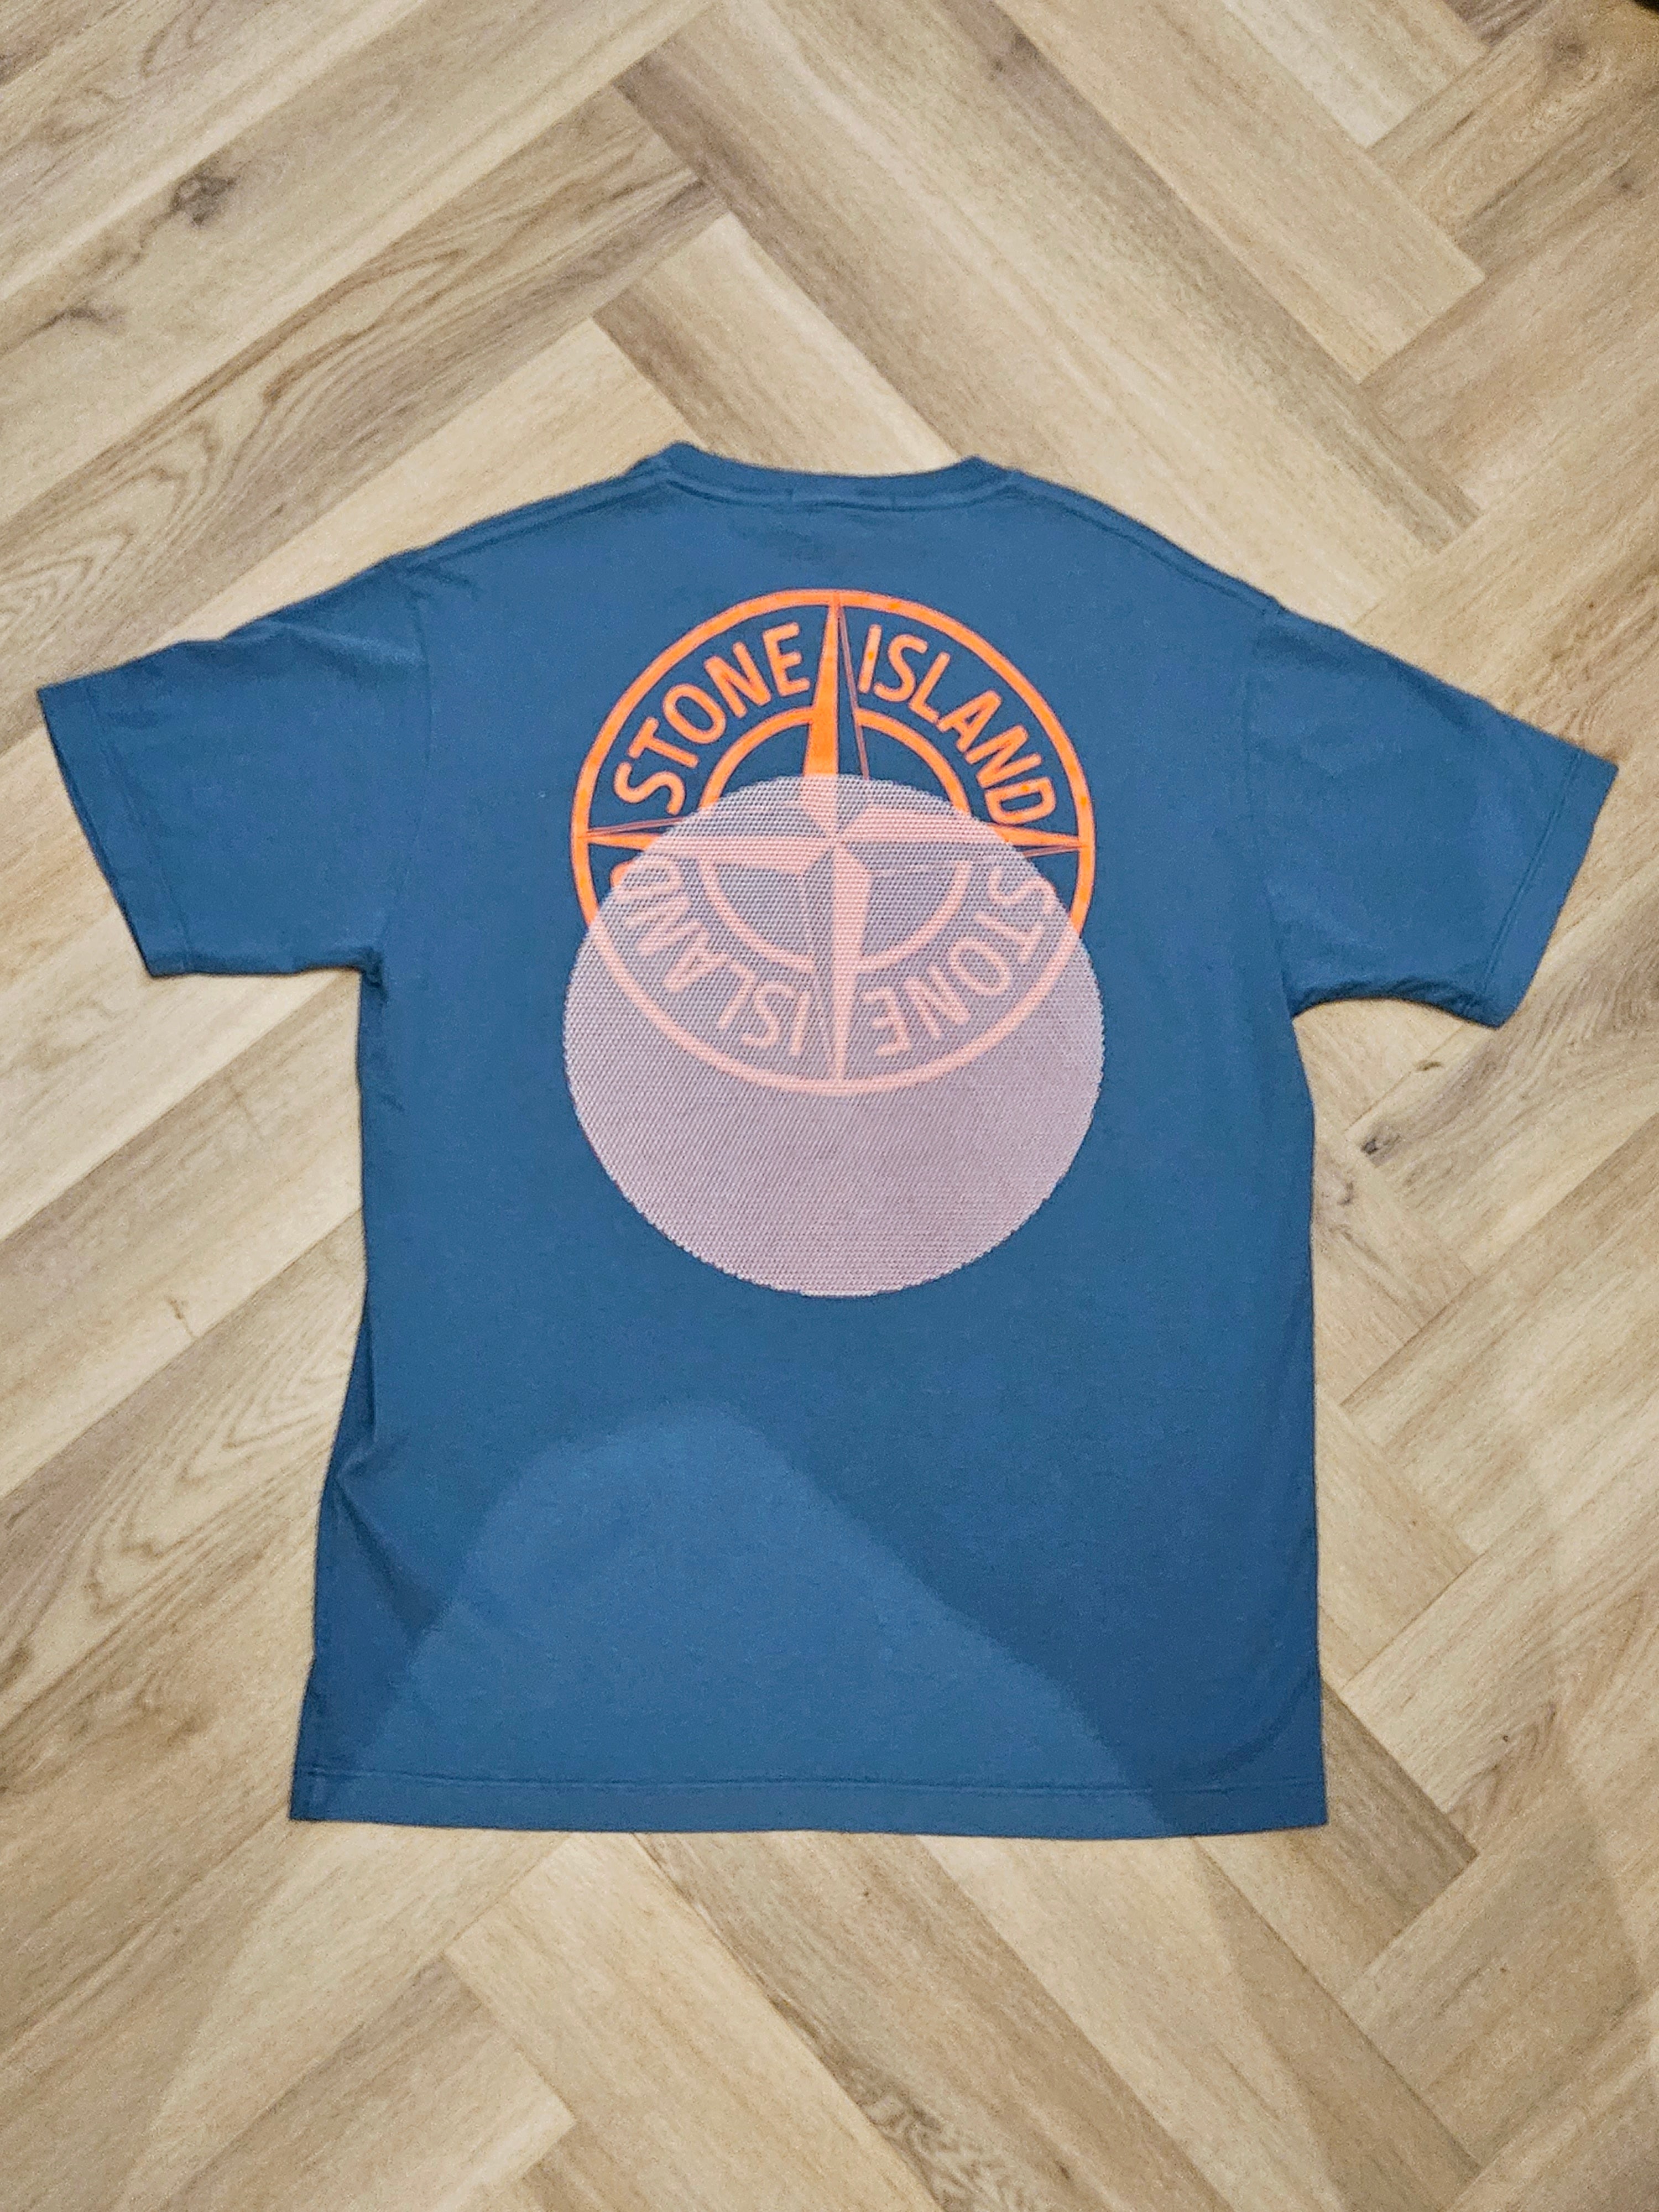 Stone Island Graphic T Shirt Sugar Blue